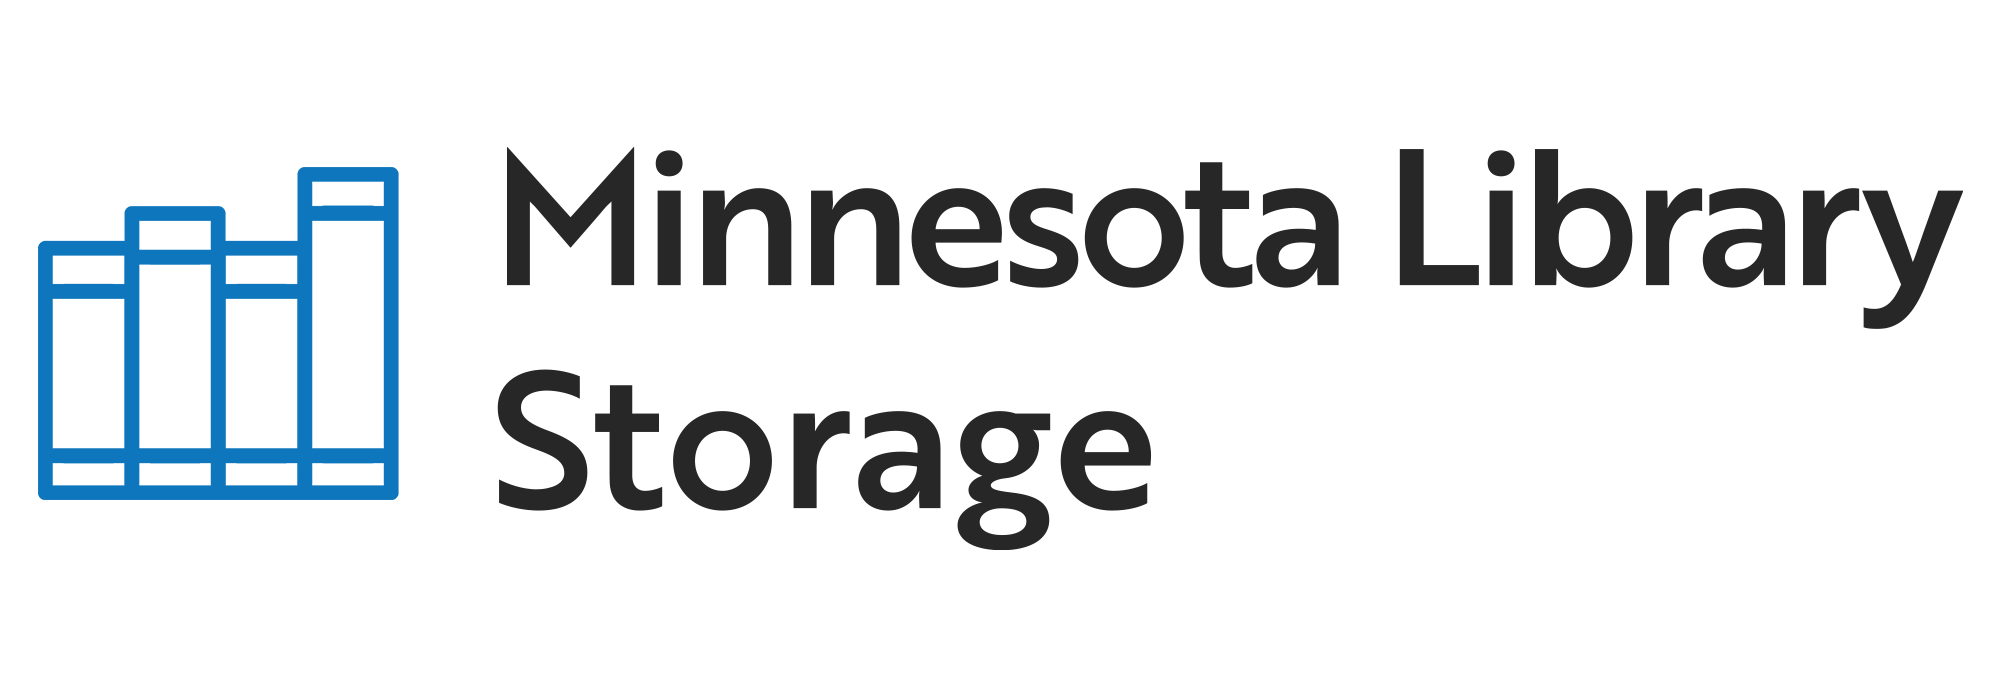 Minnesota Library Storage logo.